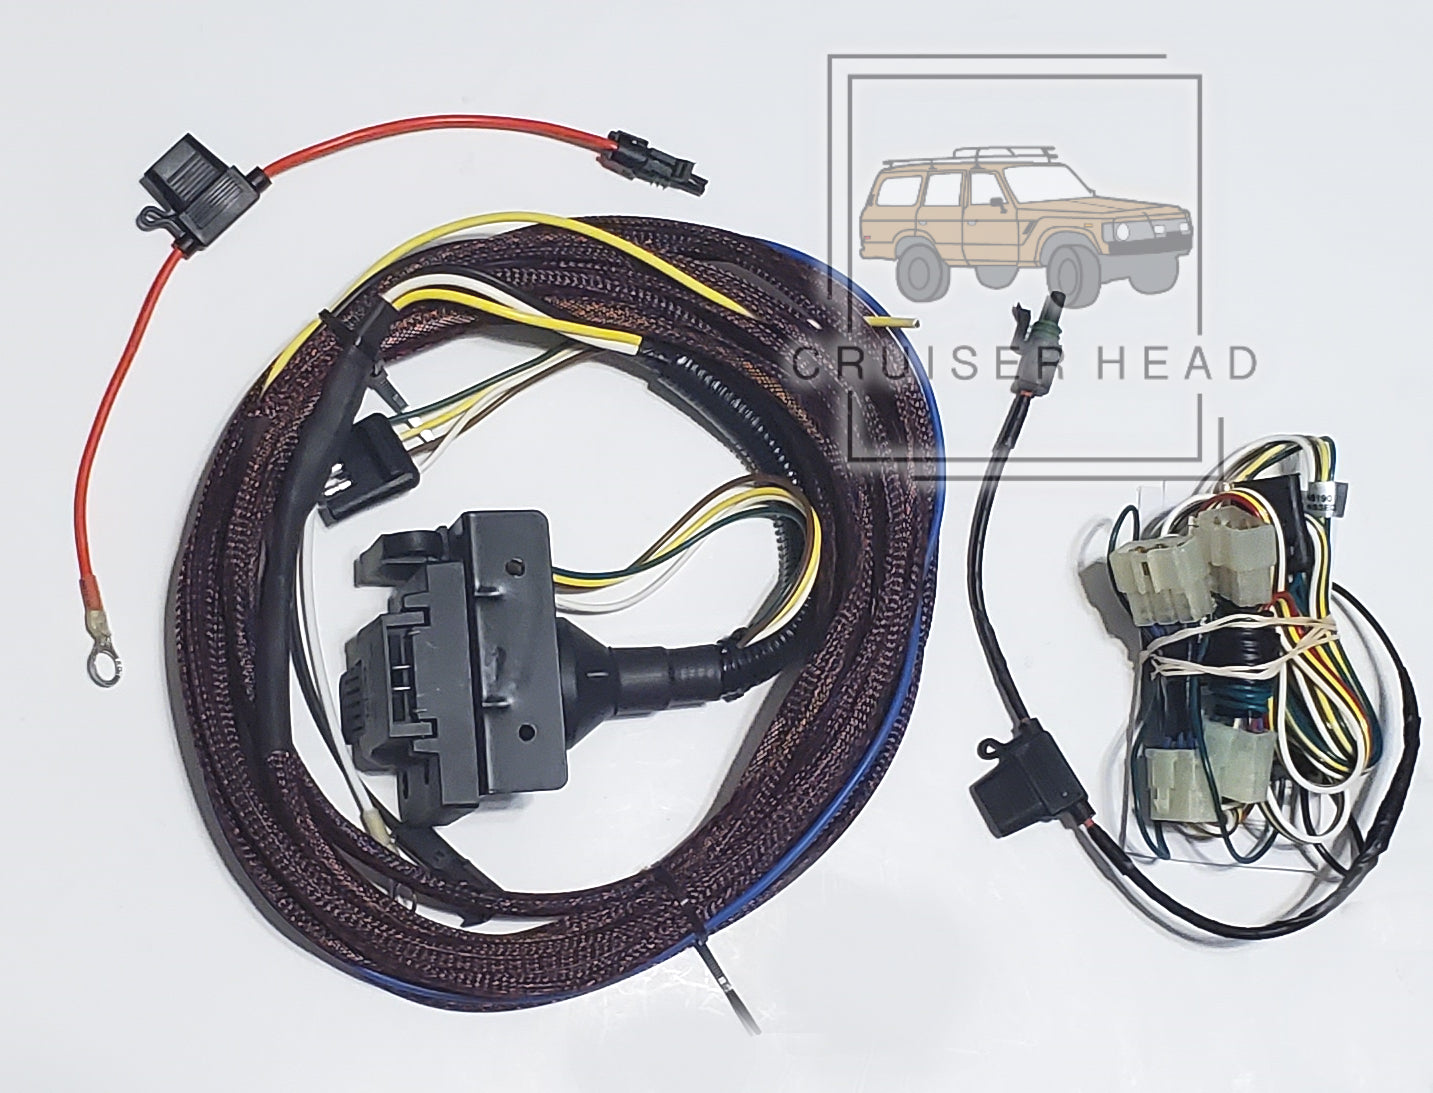 FJ60 FJ62 Trailer harness plug and play demo shot of wire harness